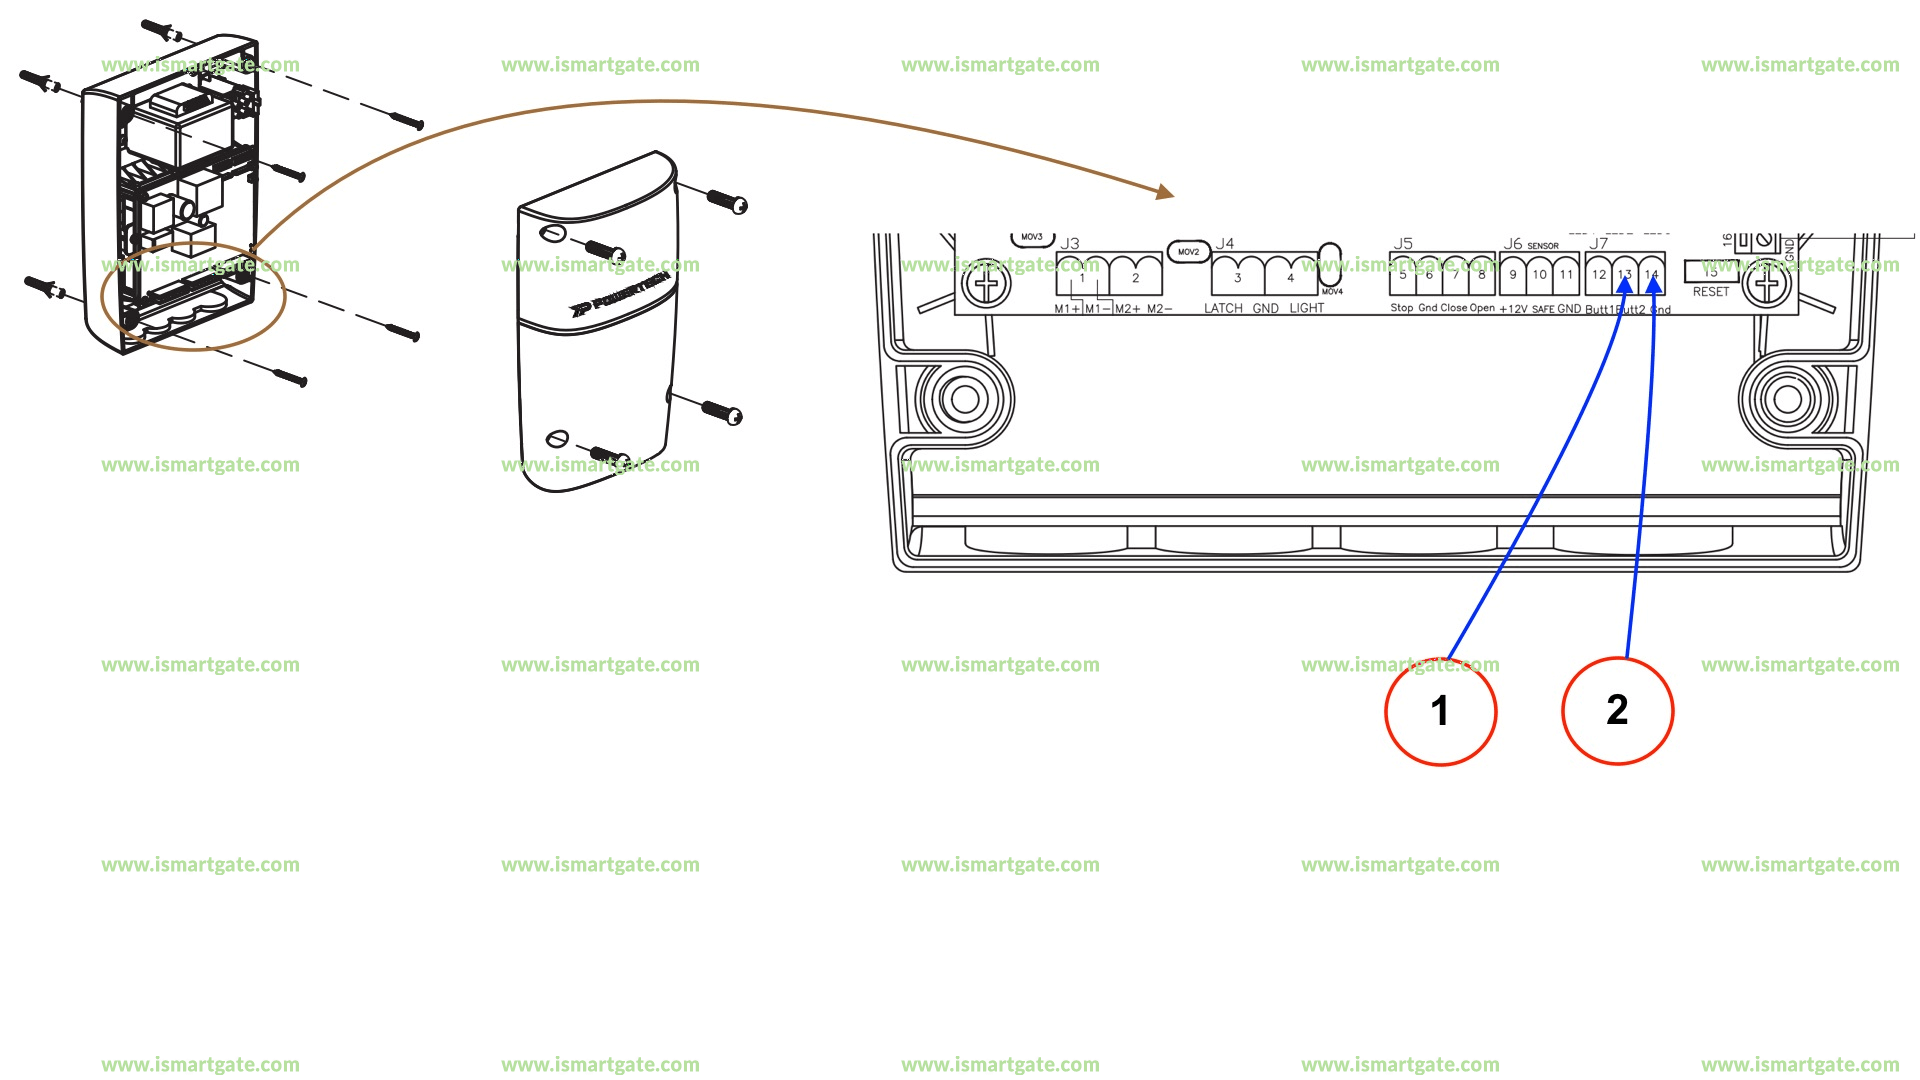 Wiring diagram for MERIK PC160 (Control Box)